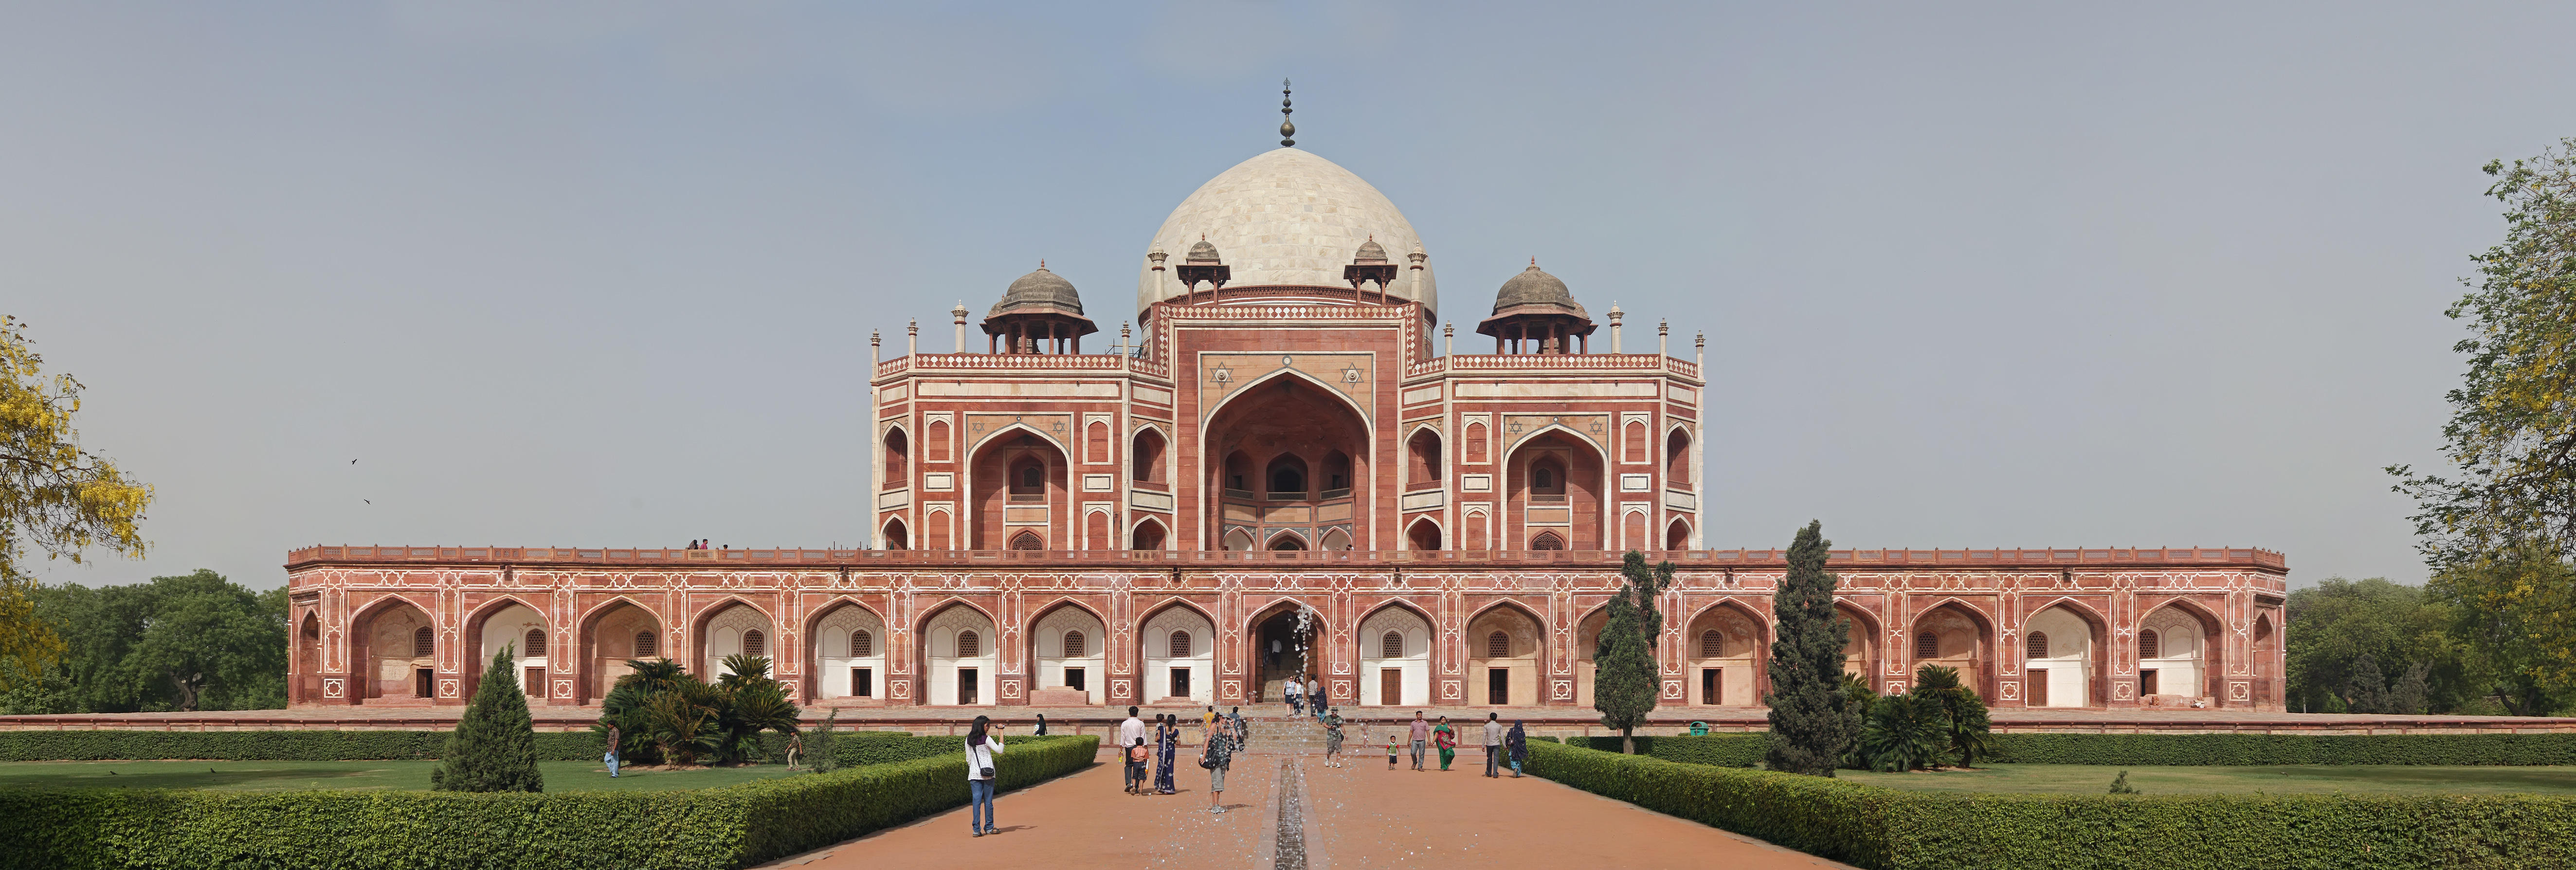 Example of Indo-Islamic Architecture: Humayun's Tomb, Delhi